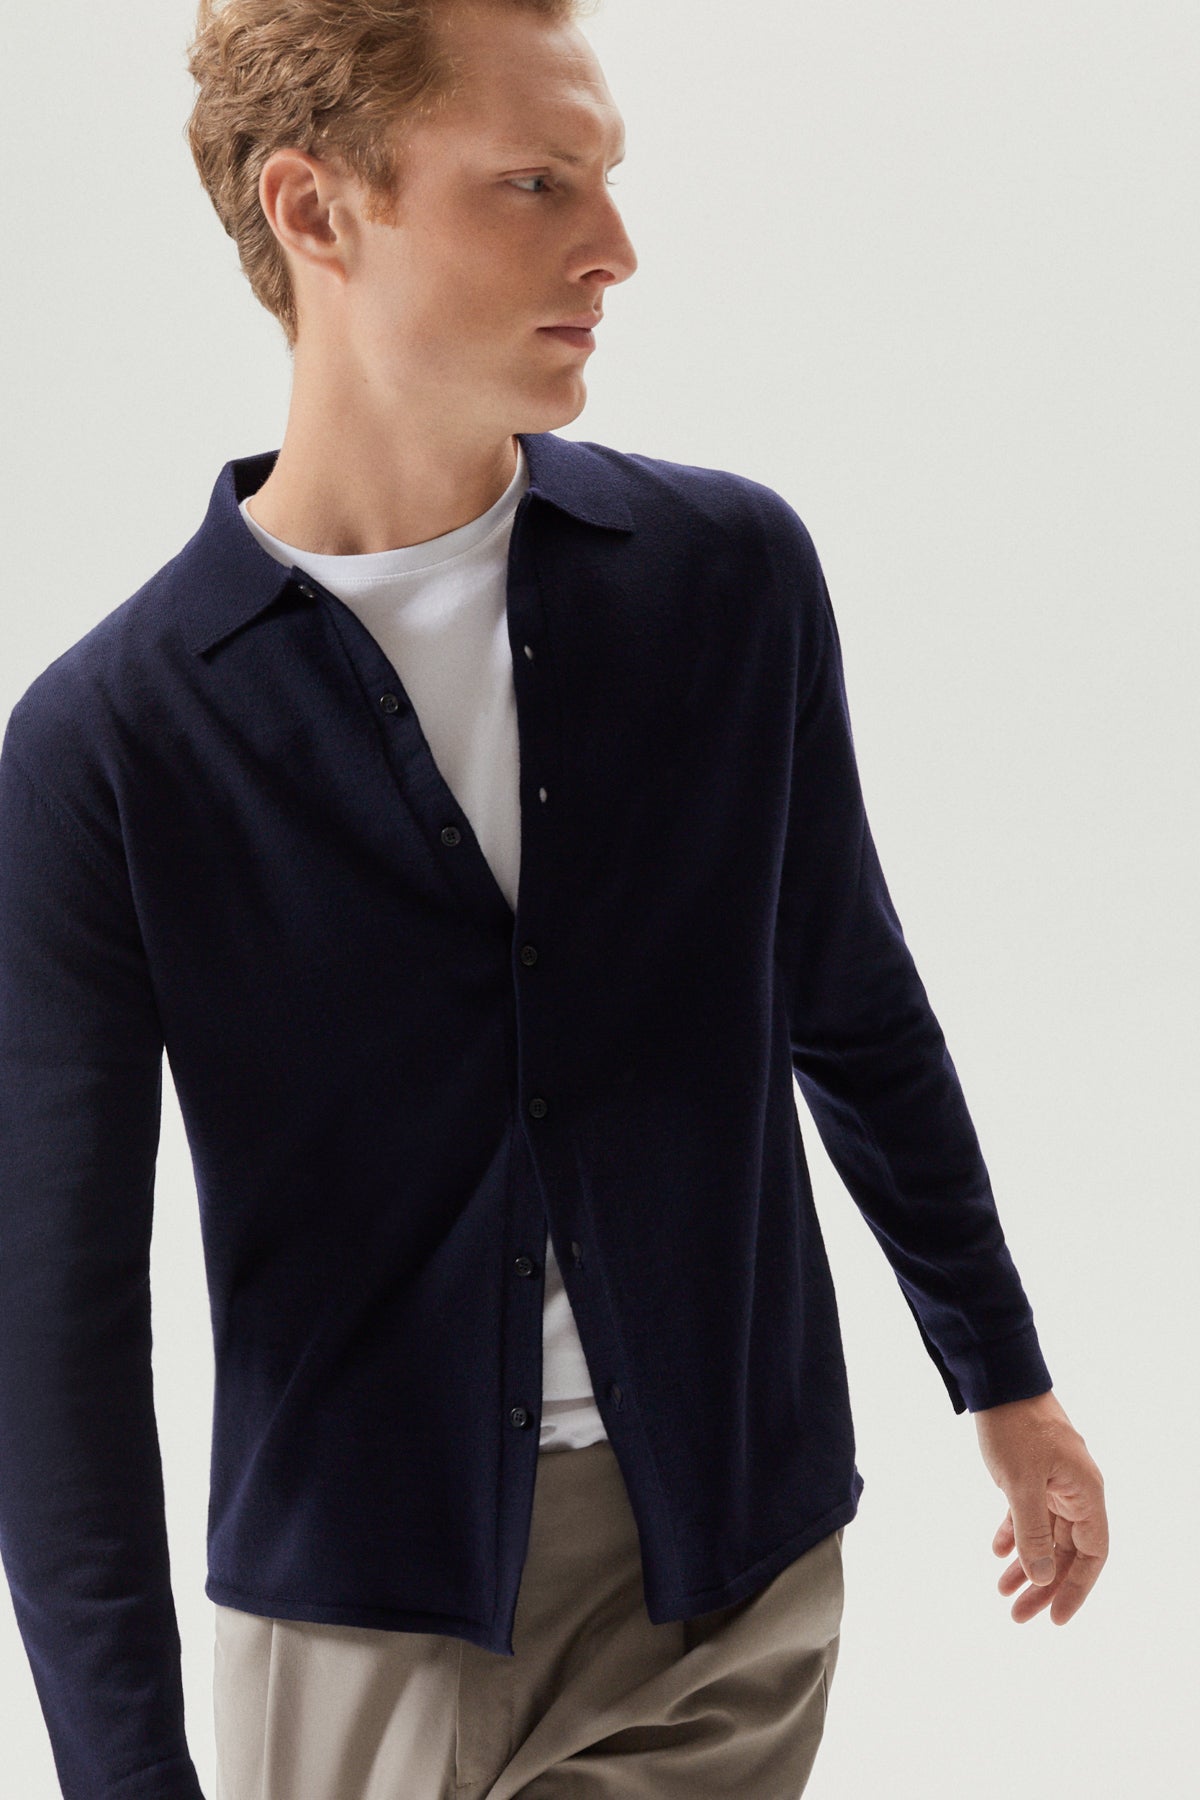 Oxford Blue | The Merino Wool Knit Shirt